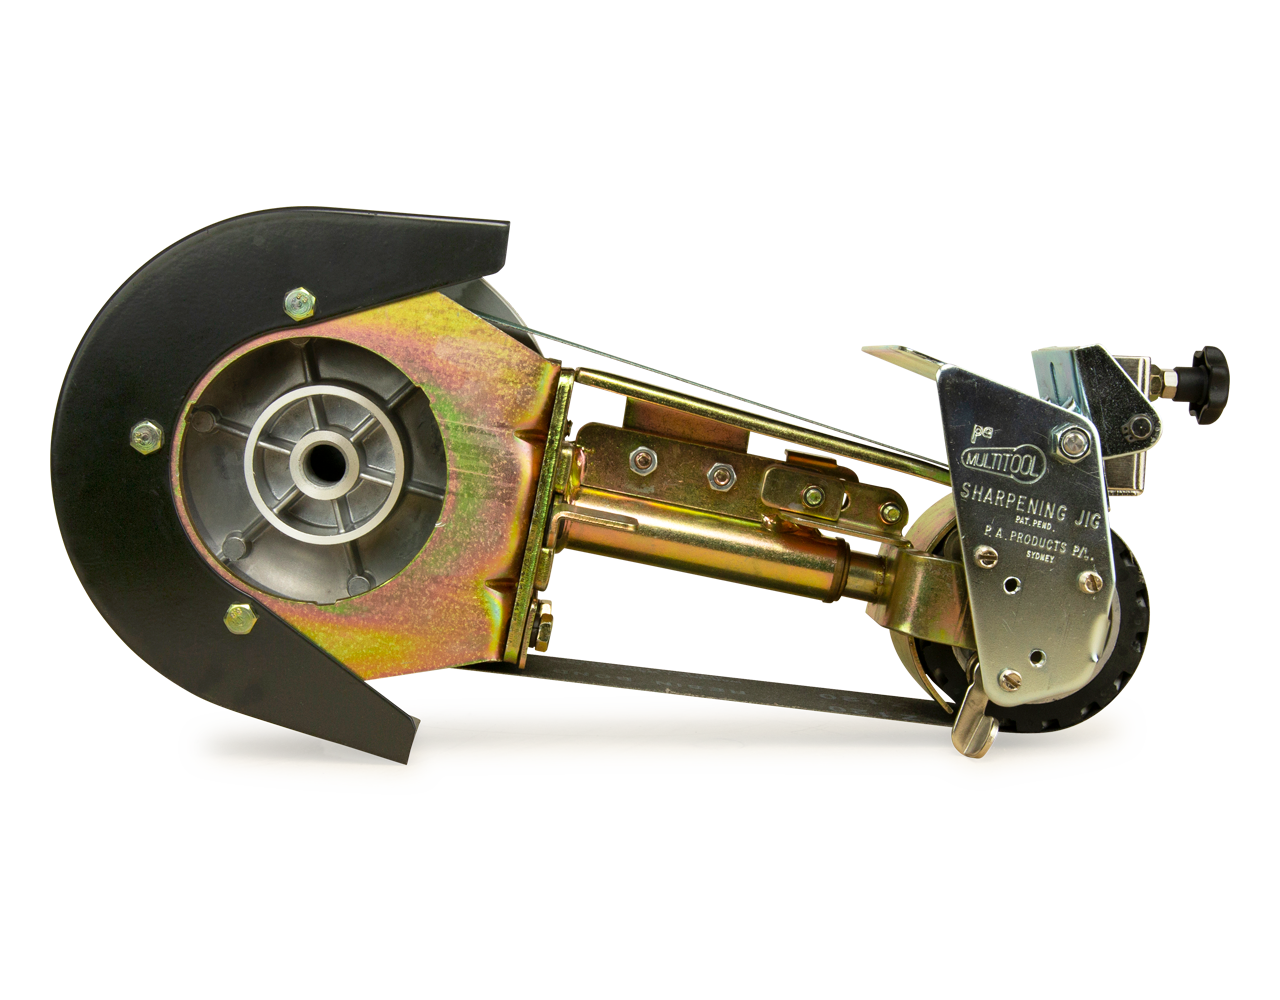 Multitool Grinders 2x36 Sharpening Jig on RIKON 8 inch Low Speed Bench Grinder